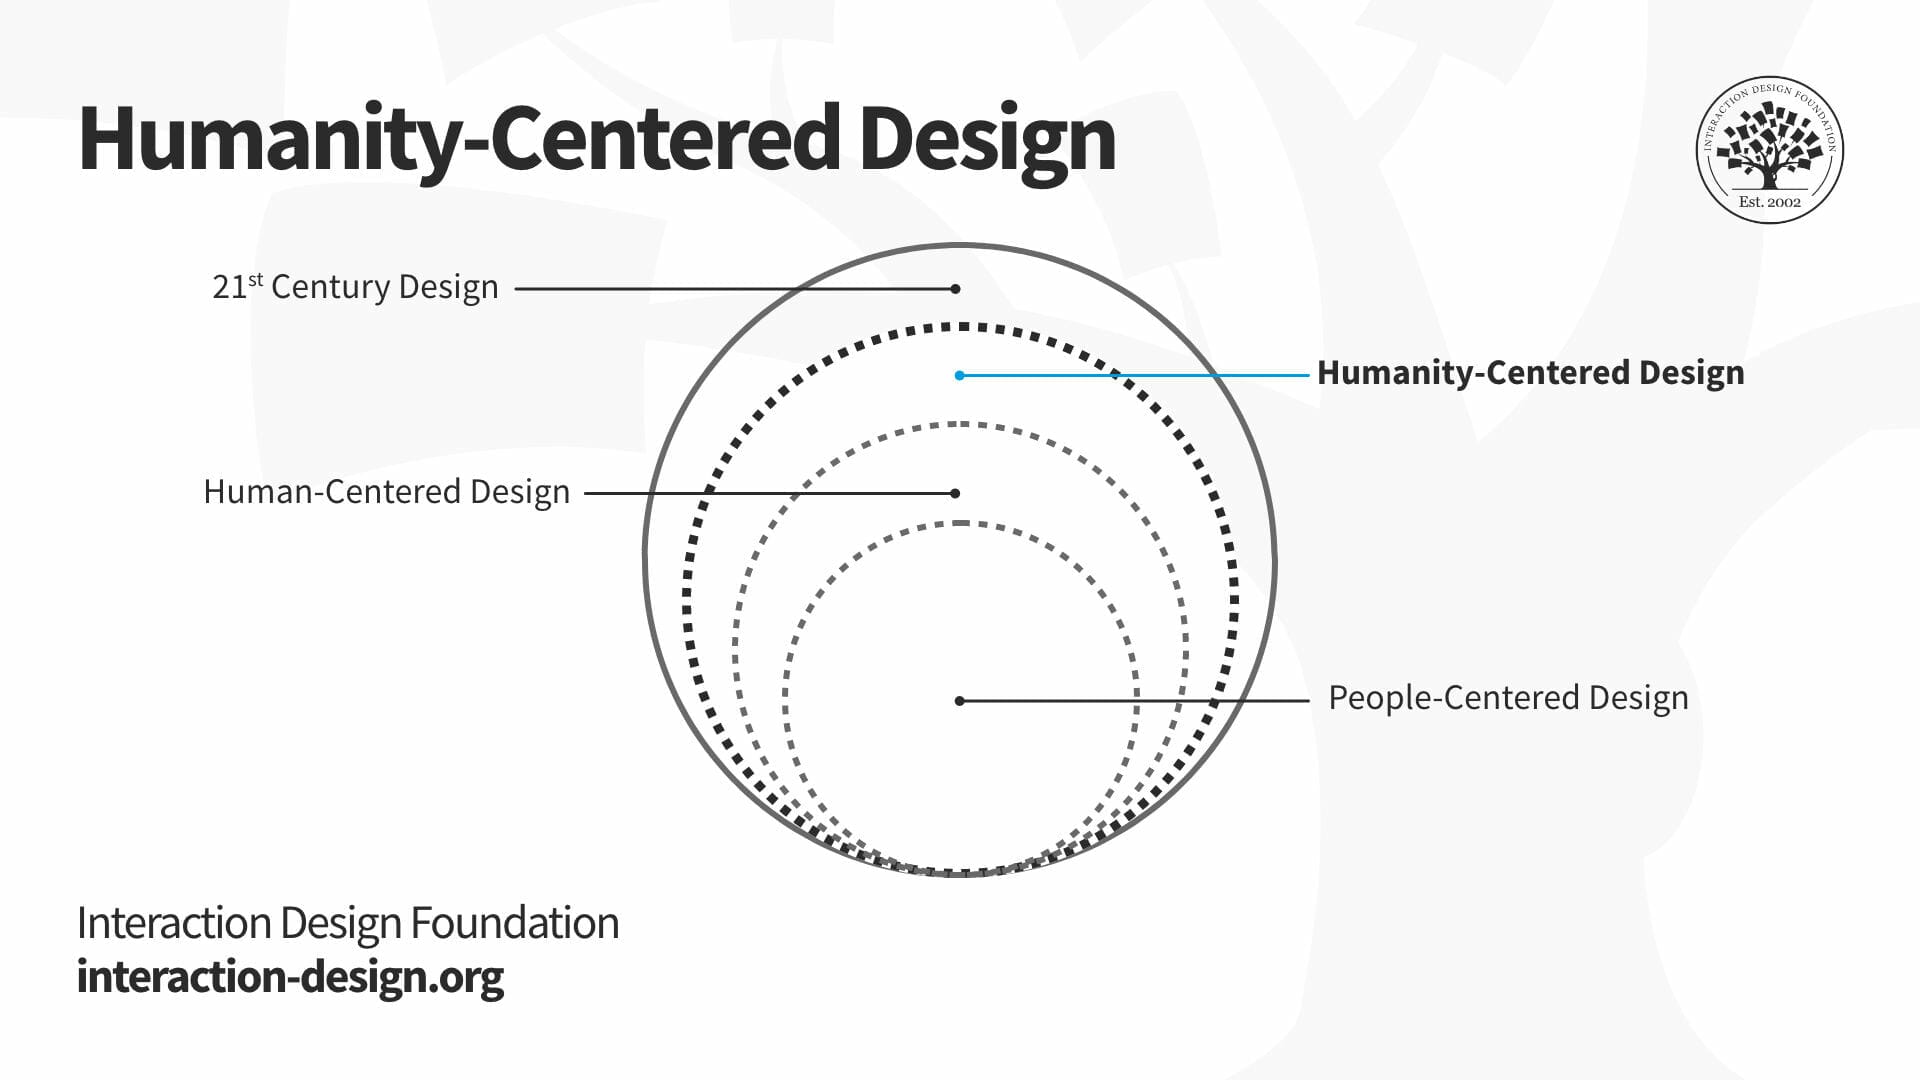 Humanity-centered design